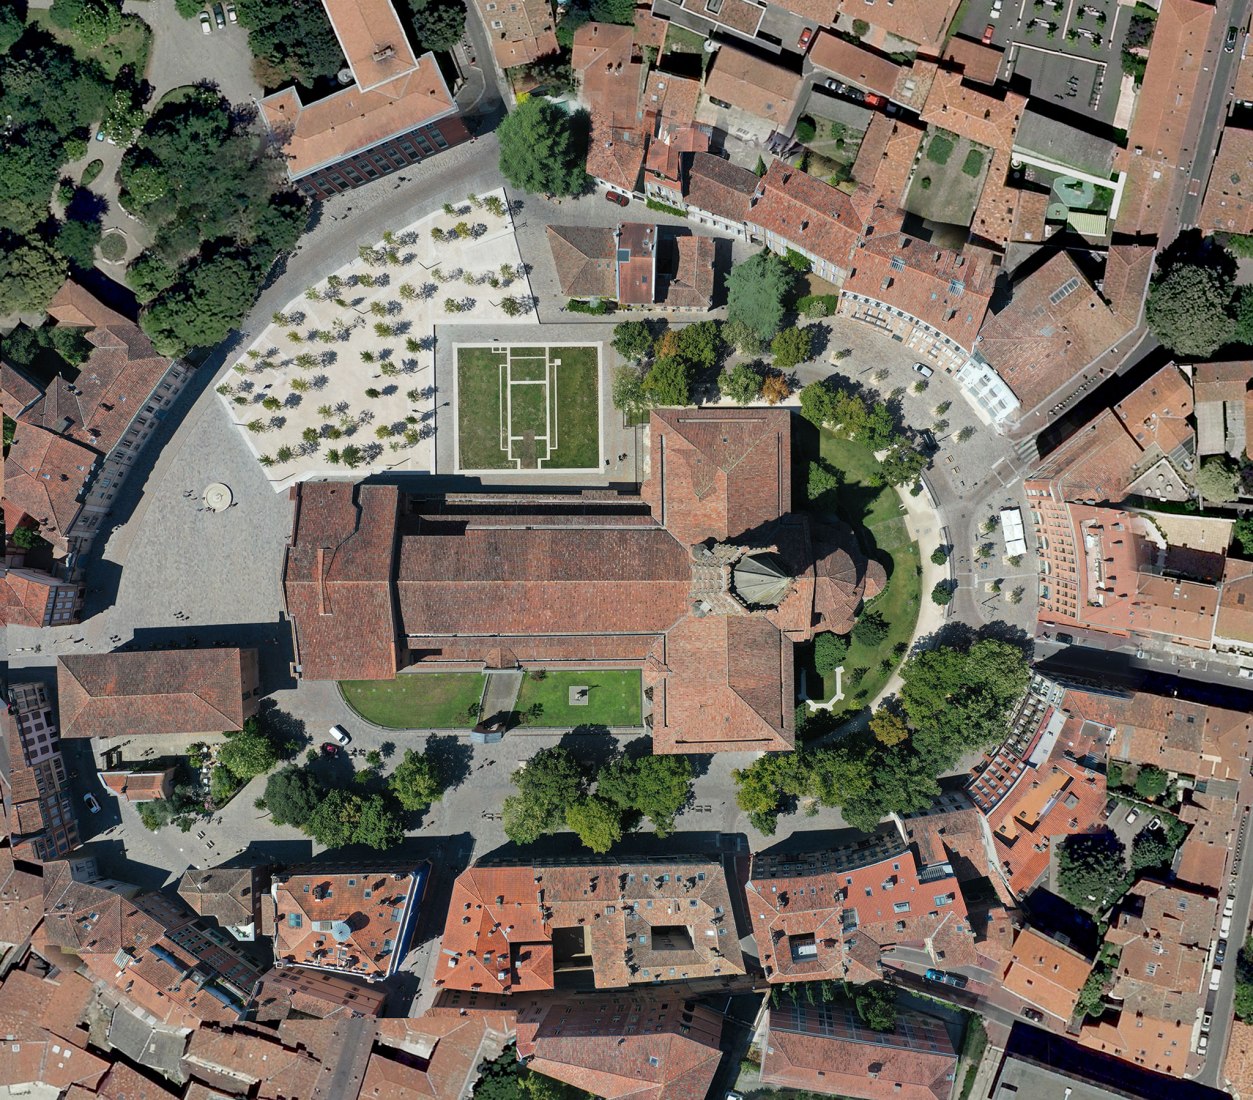 Development of the public space around the Basilica of Saint Sernin by Joan Busquets (BAU). Photograph by BAU